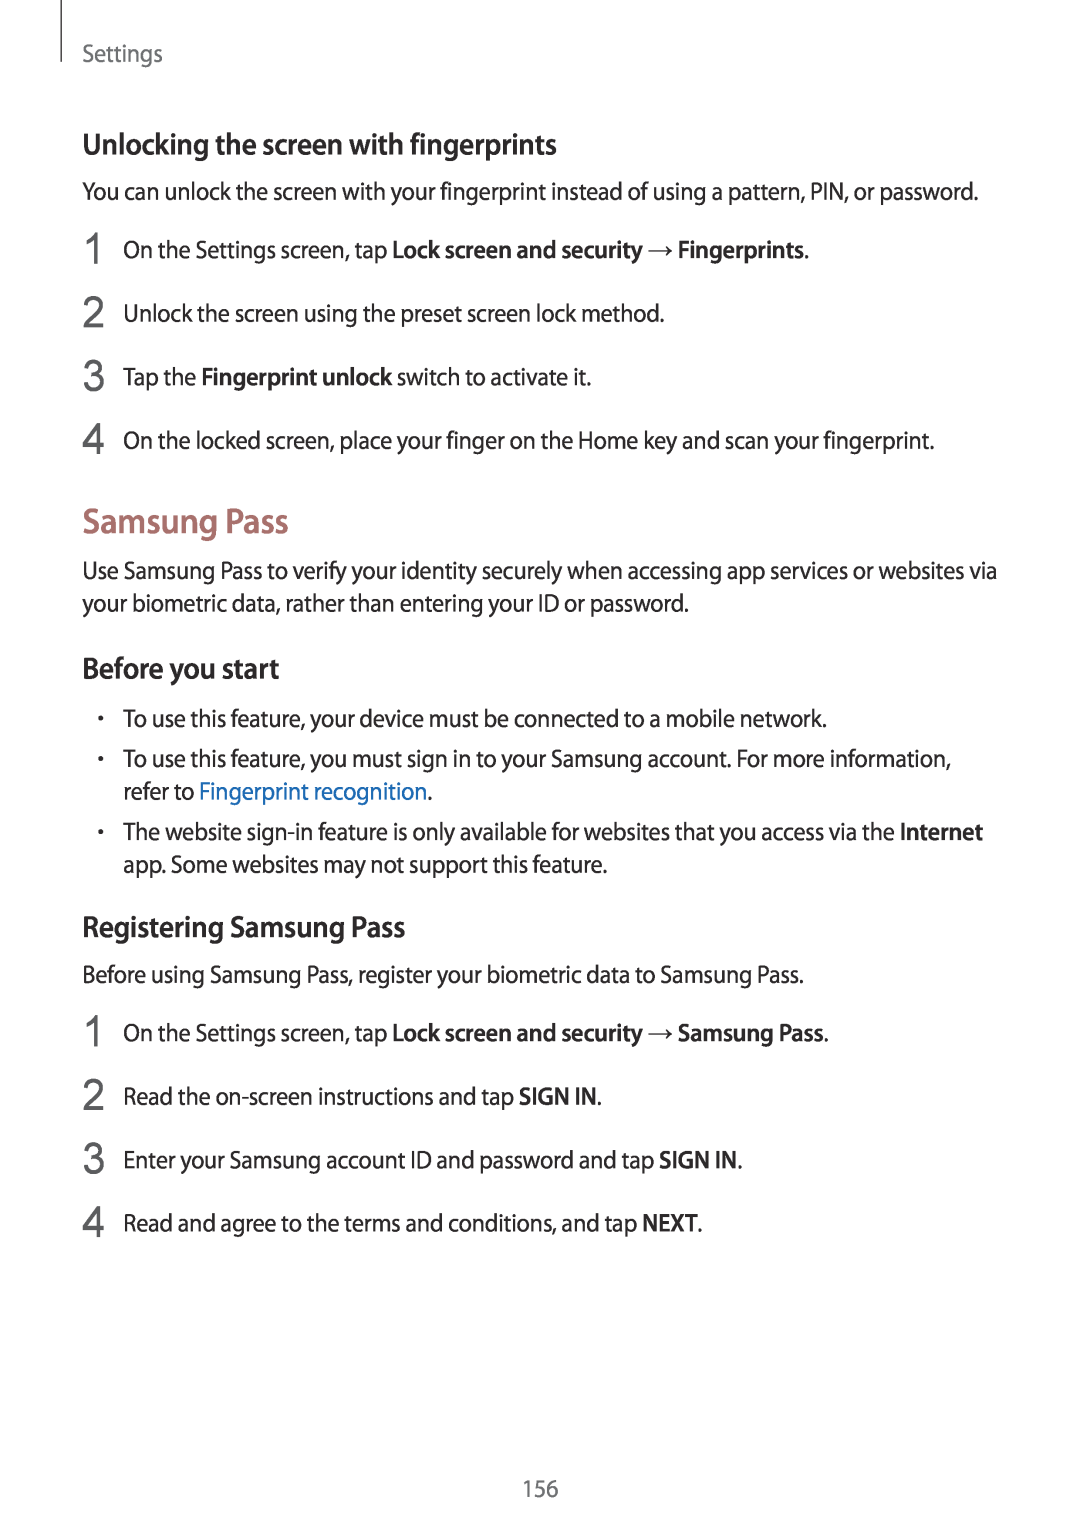 Samsung SM-G925FZWENEE Unlocking the screen with fingerprints, Registering Samsung Pass, Before you start, Settings 